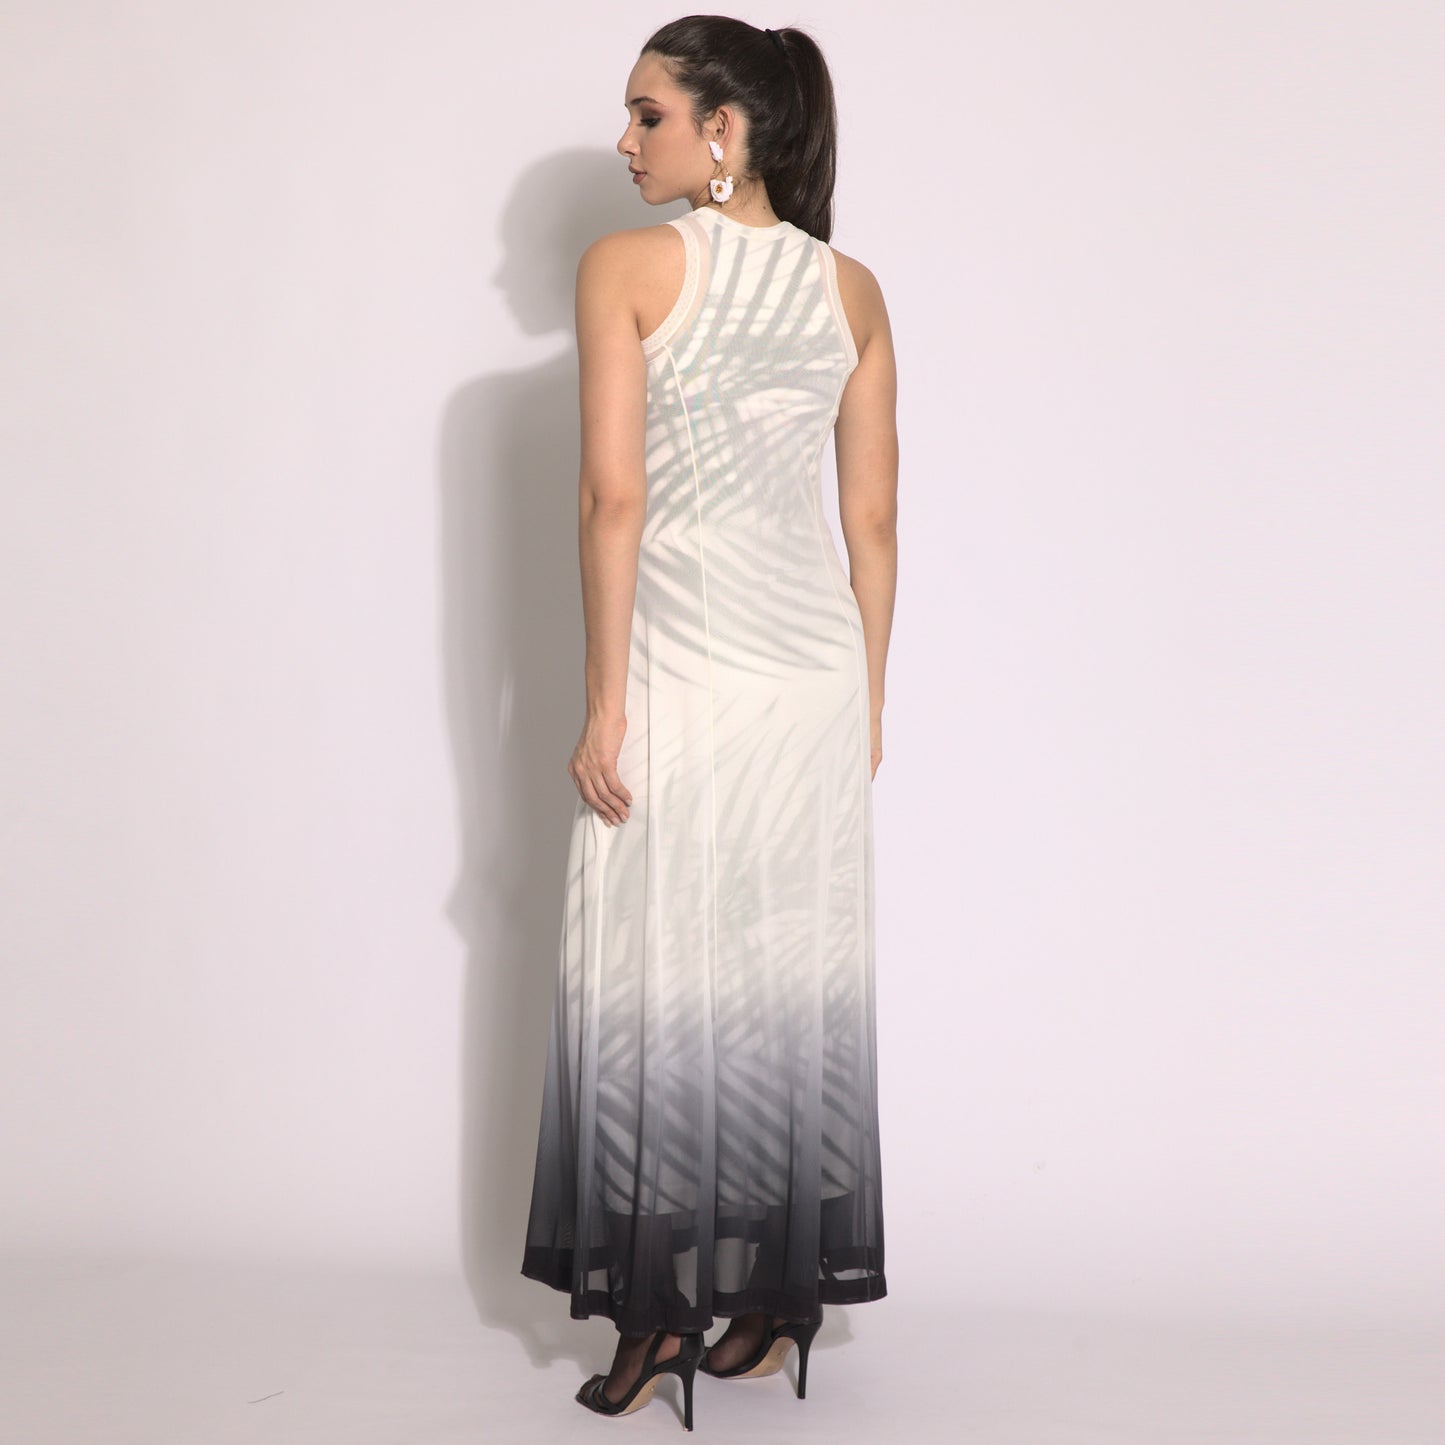 Mesh Dress - Fading effect tulle dress (second skin)